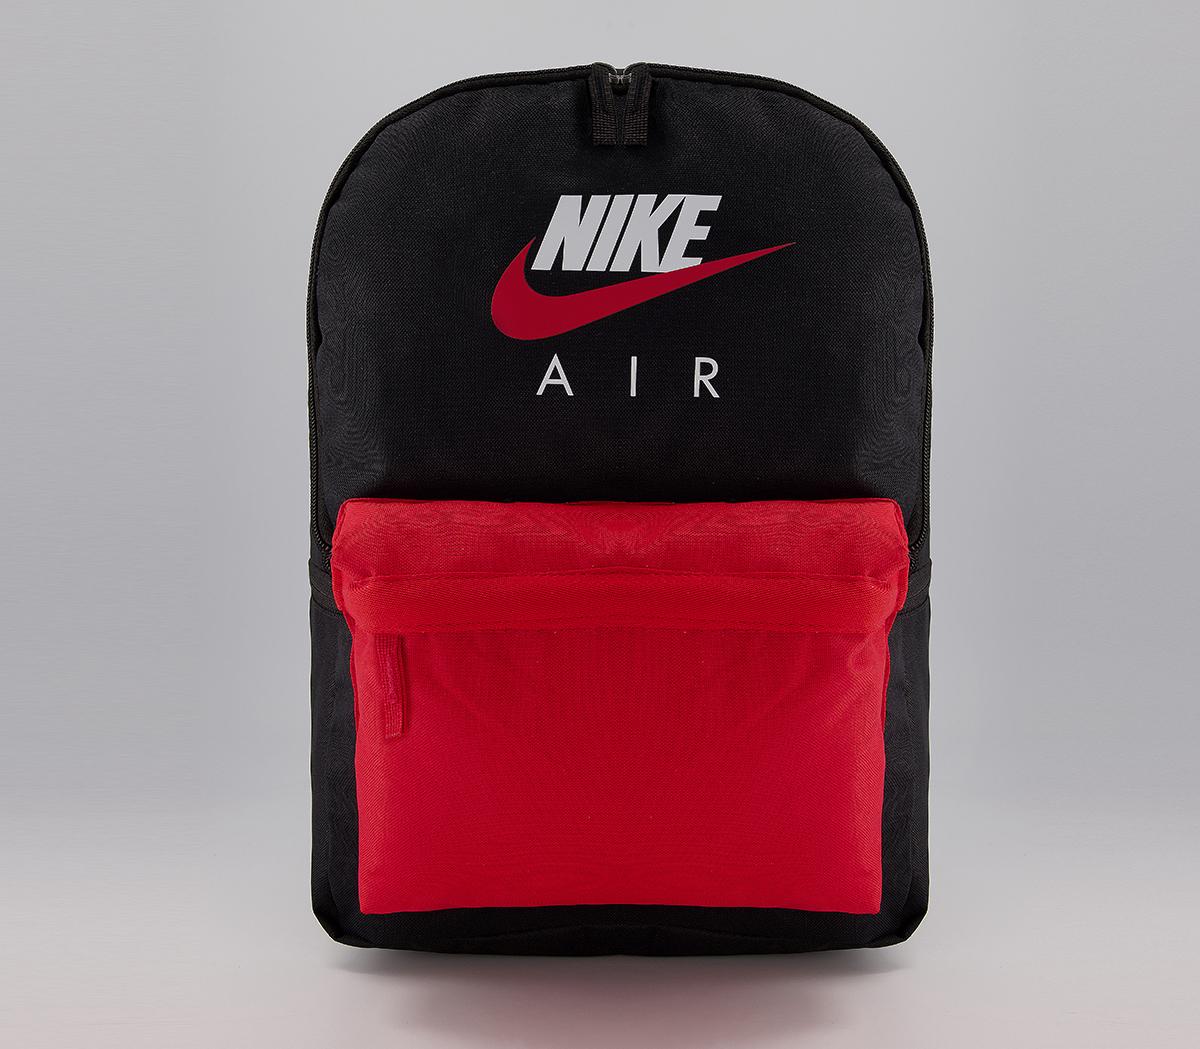 Nike JDI Zip Pull Lunch Bag, Red, One Size - Walmart.com